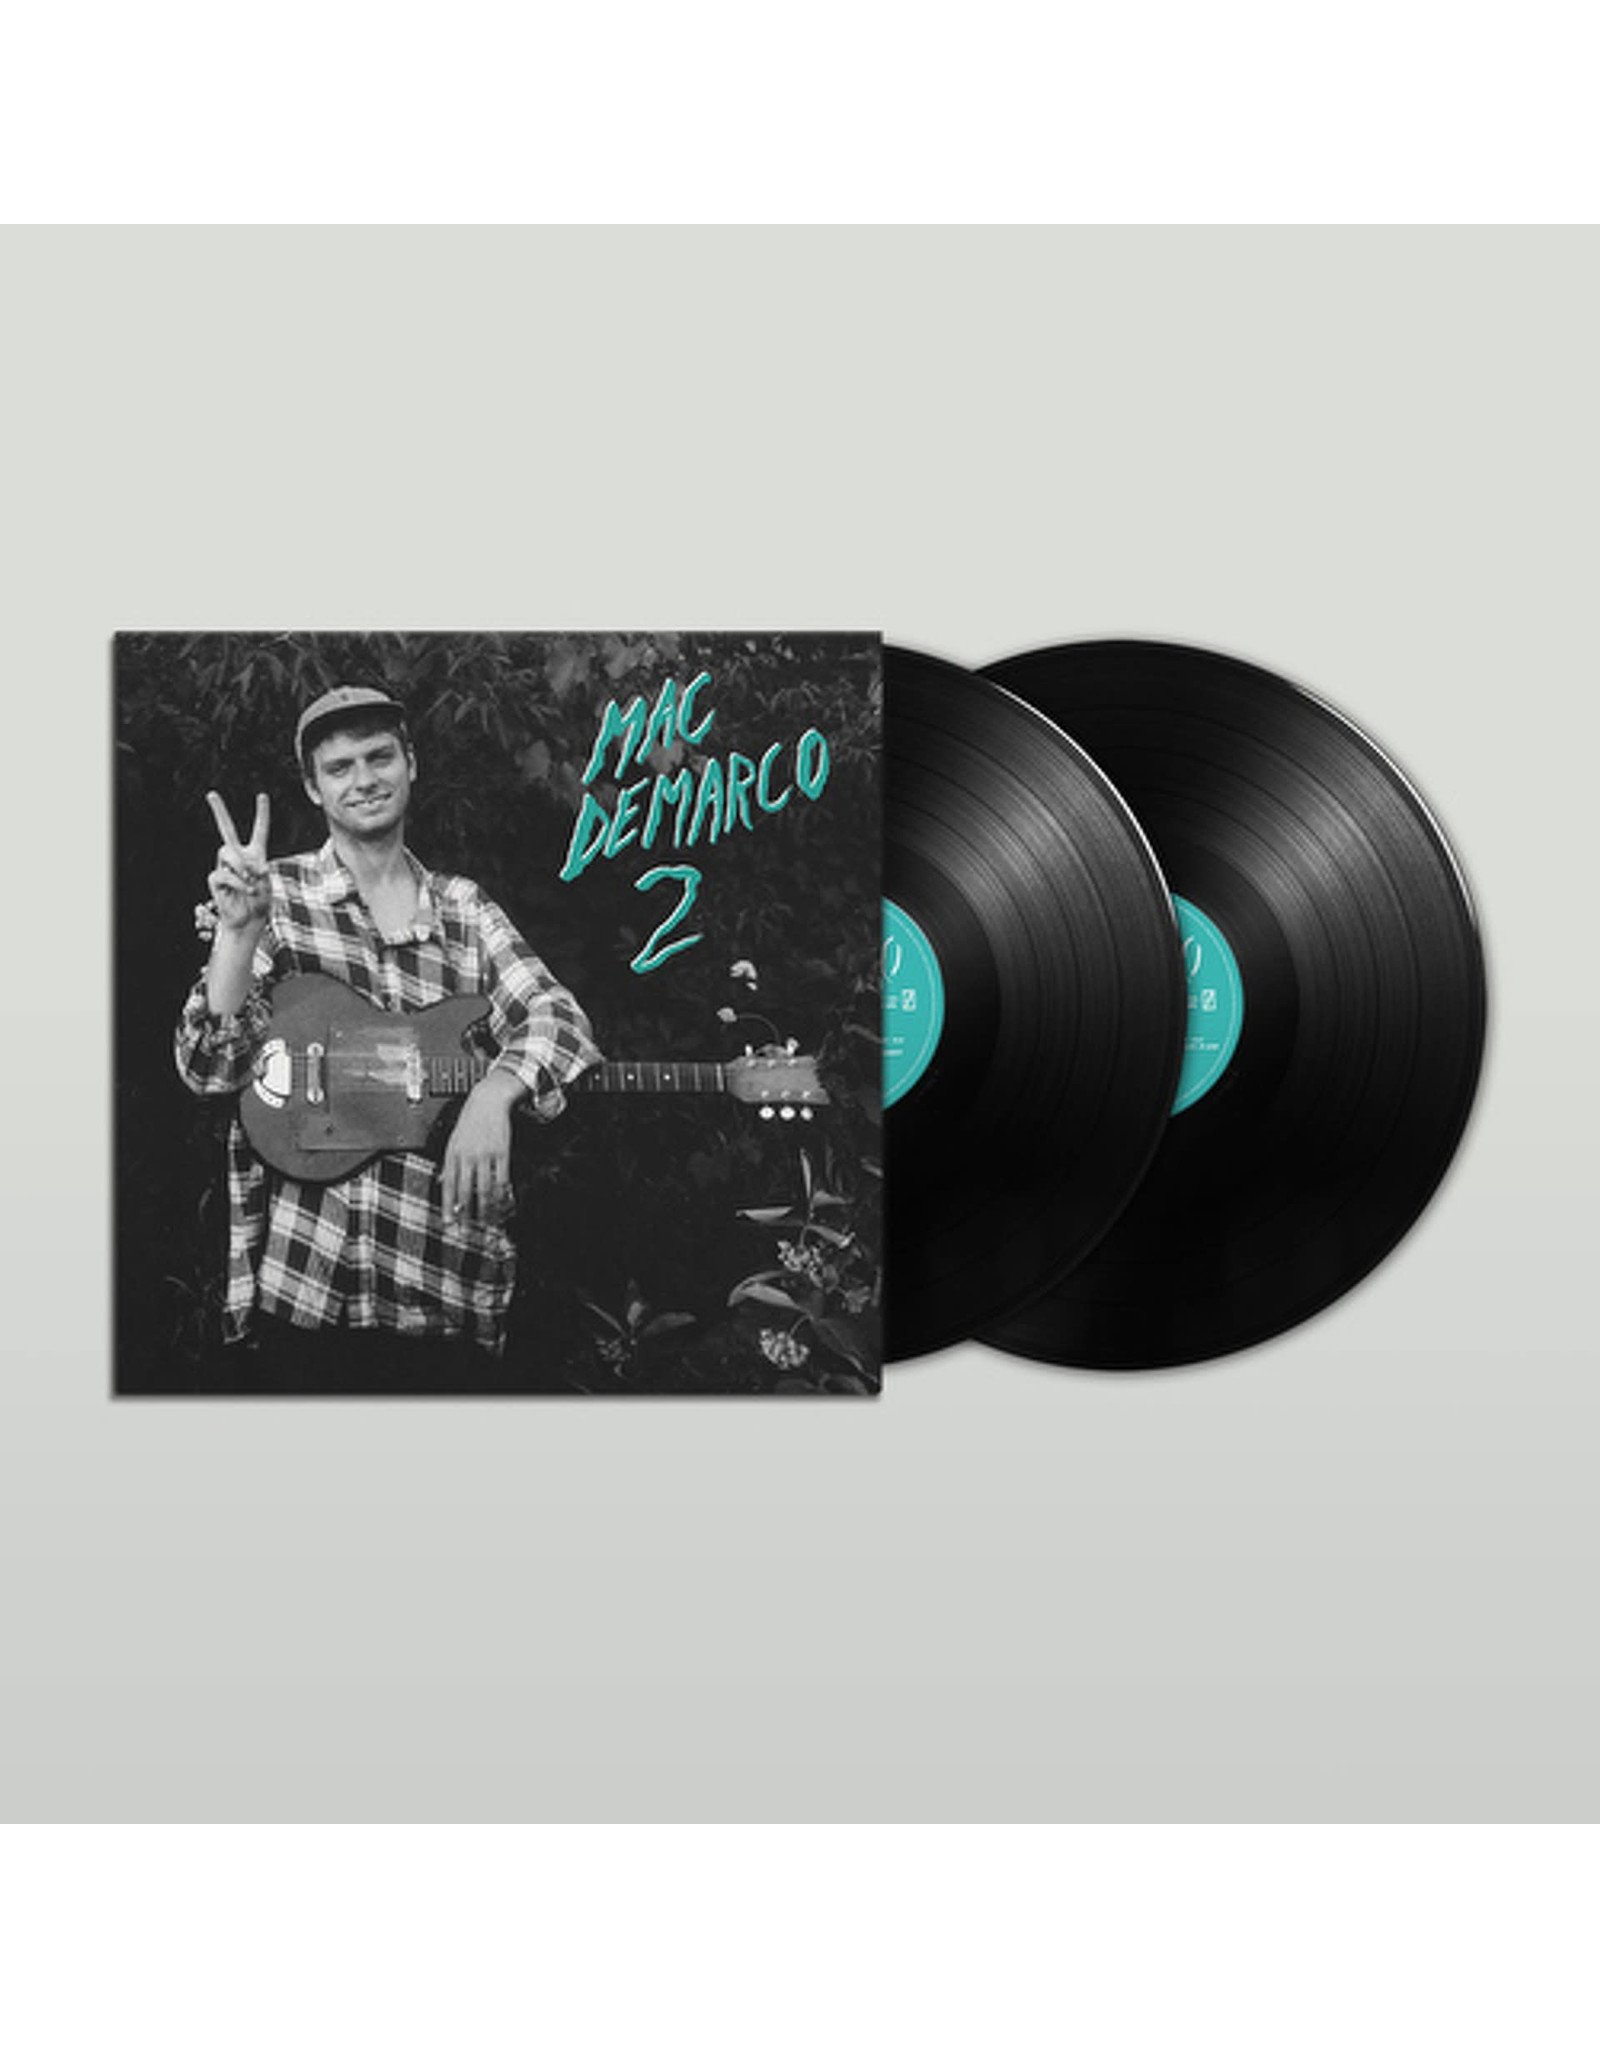 Captured Tracks DeMarco, Mac: 2 (2LP-10 year anniversary edition) LP